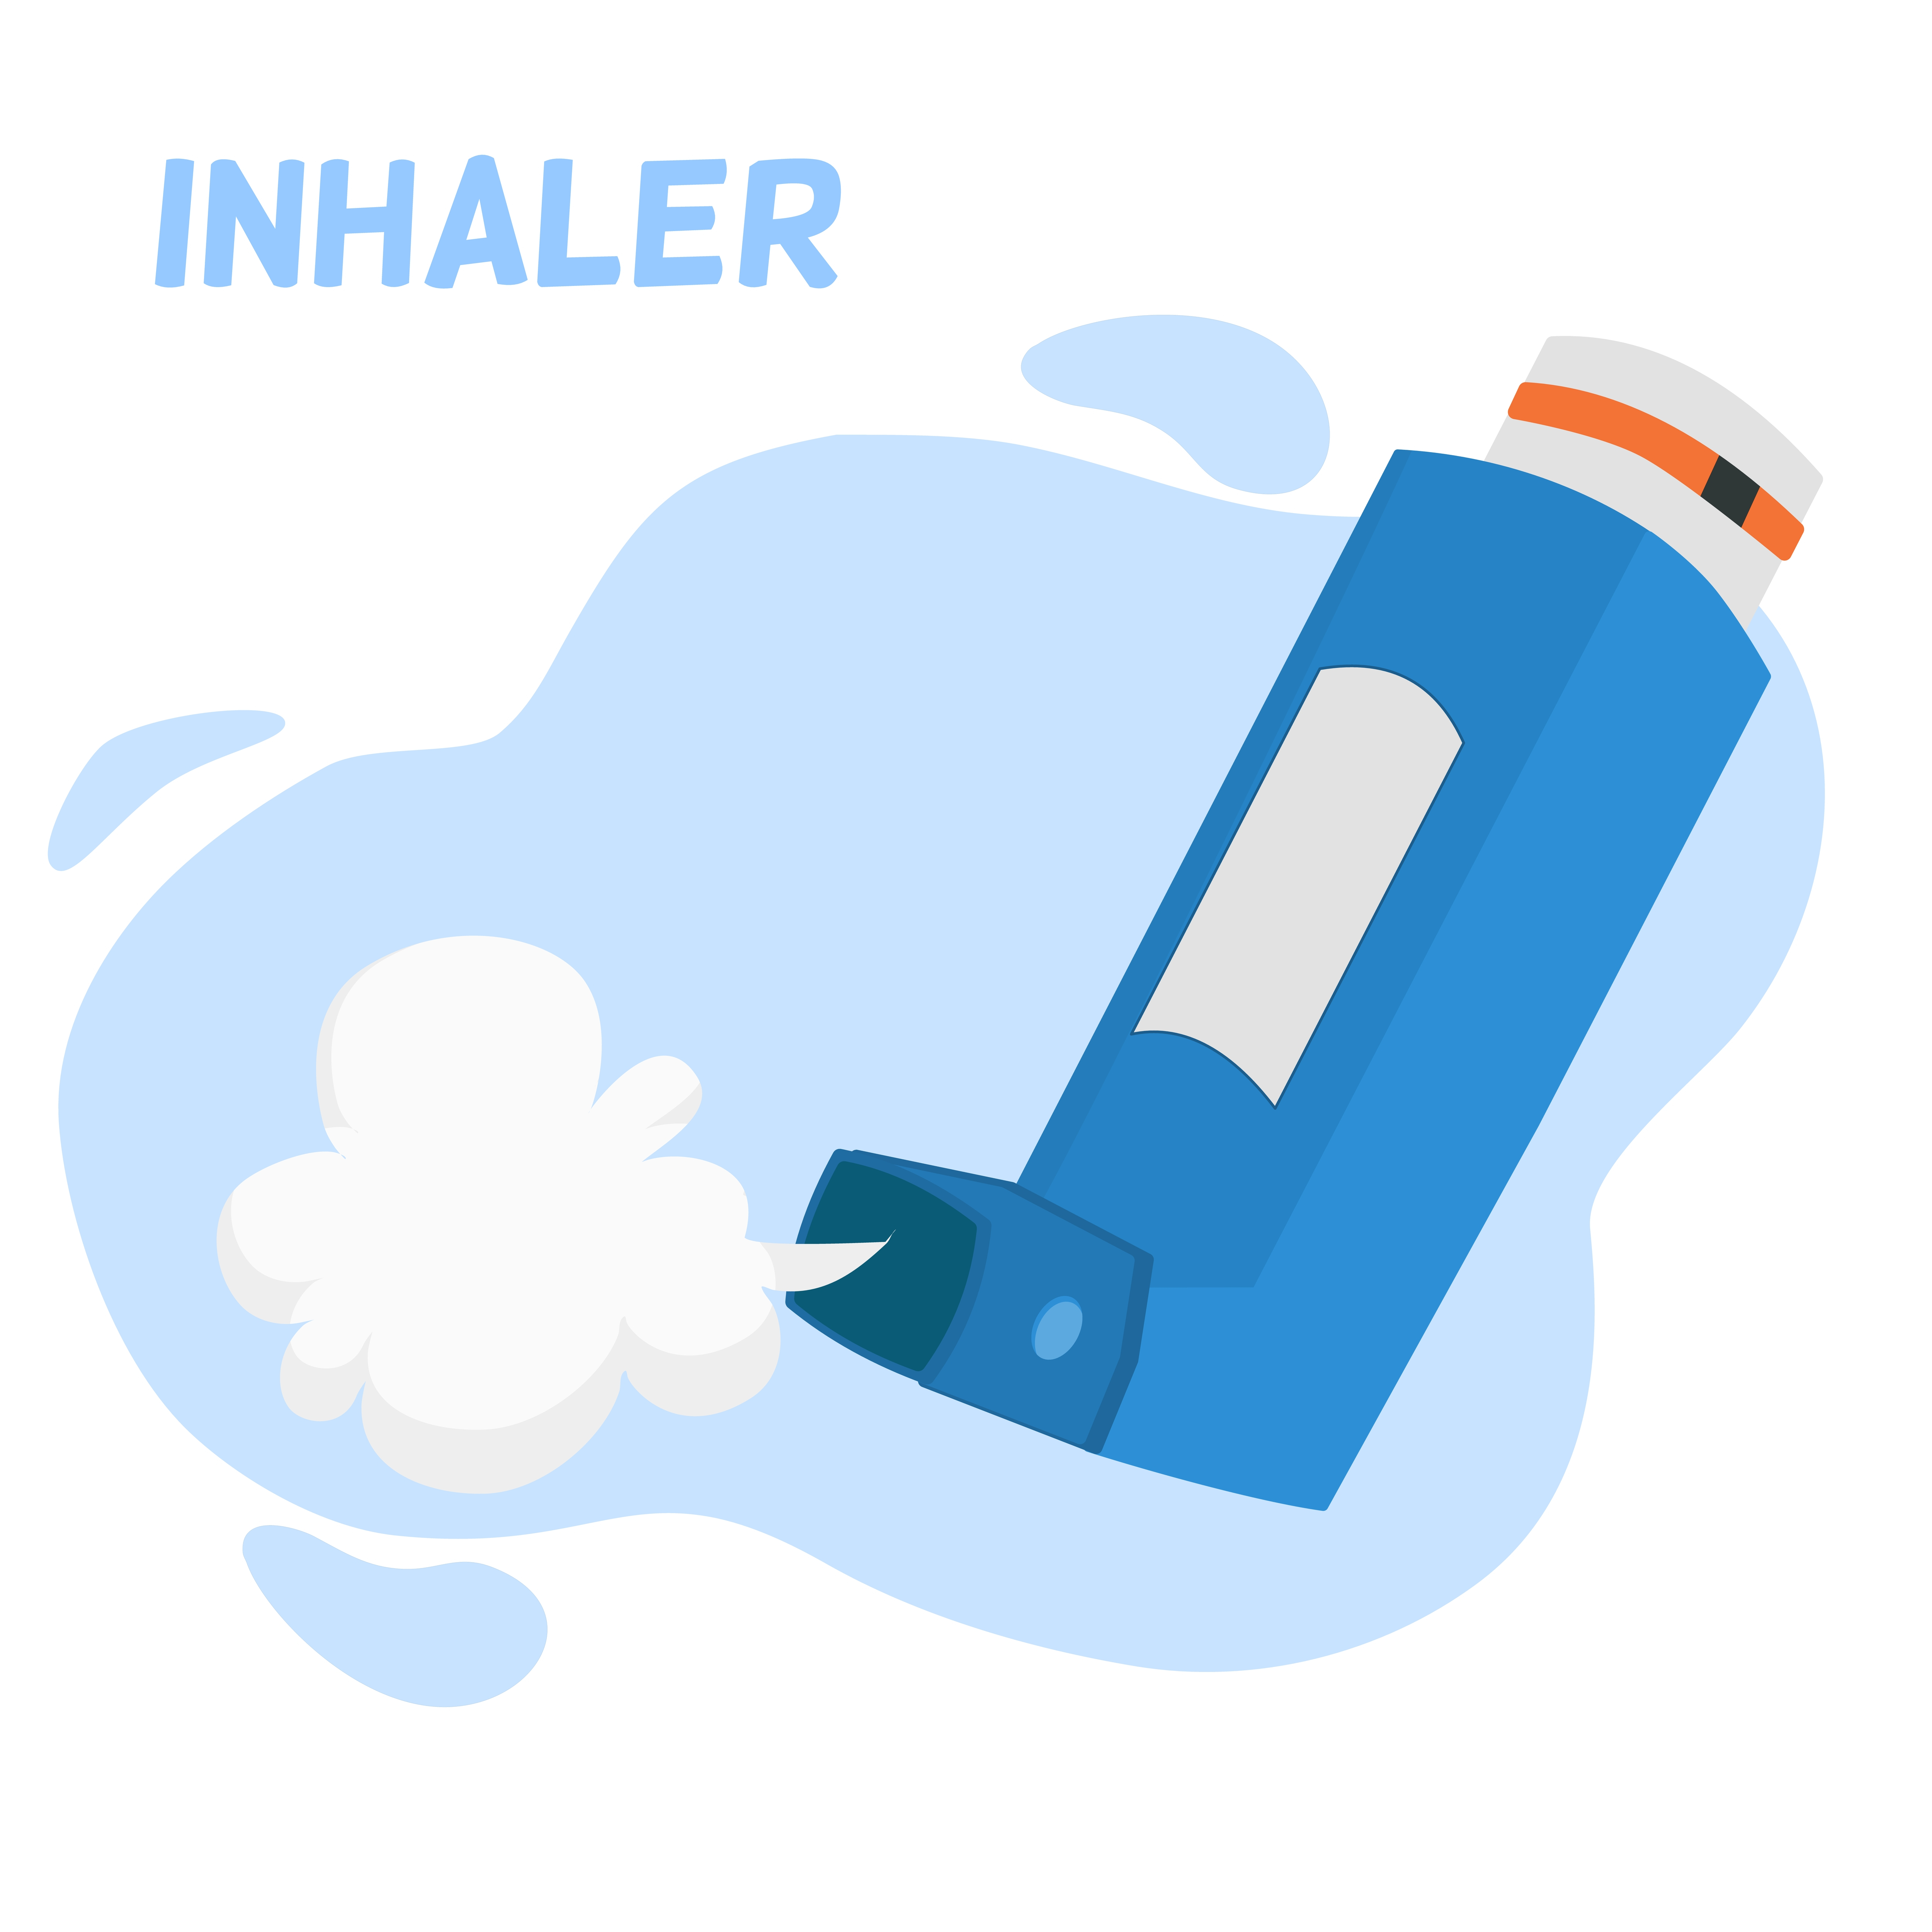 Inhalers and medication